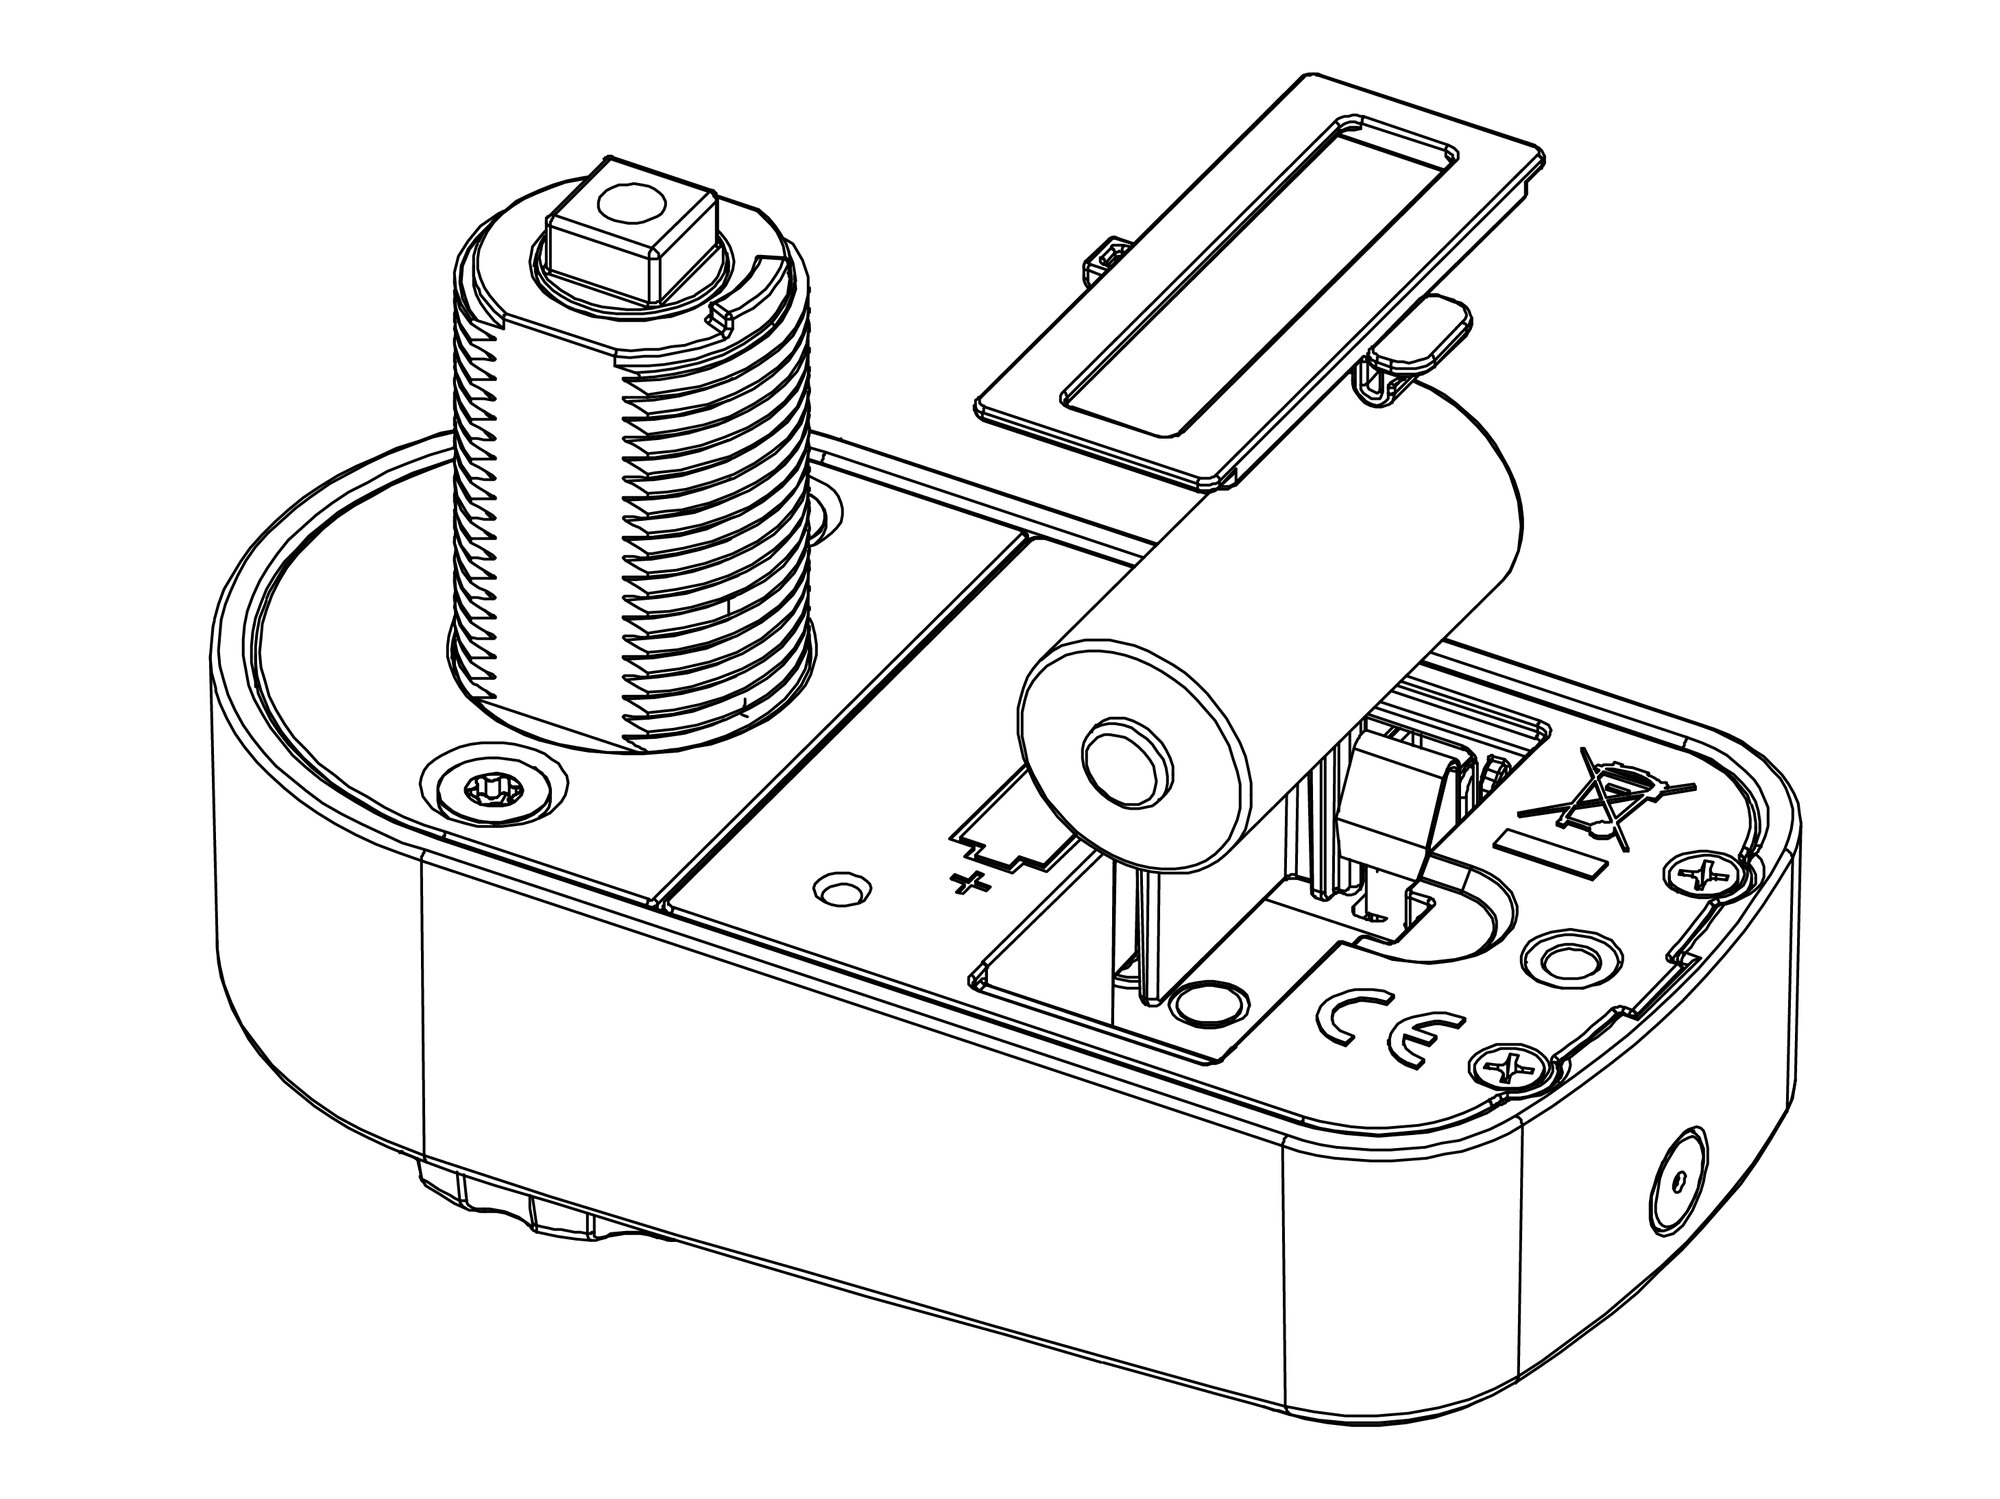 Diagram of battery insertion in Flexlock Visible lock